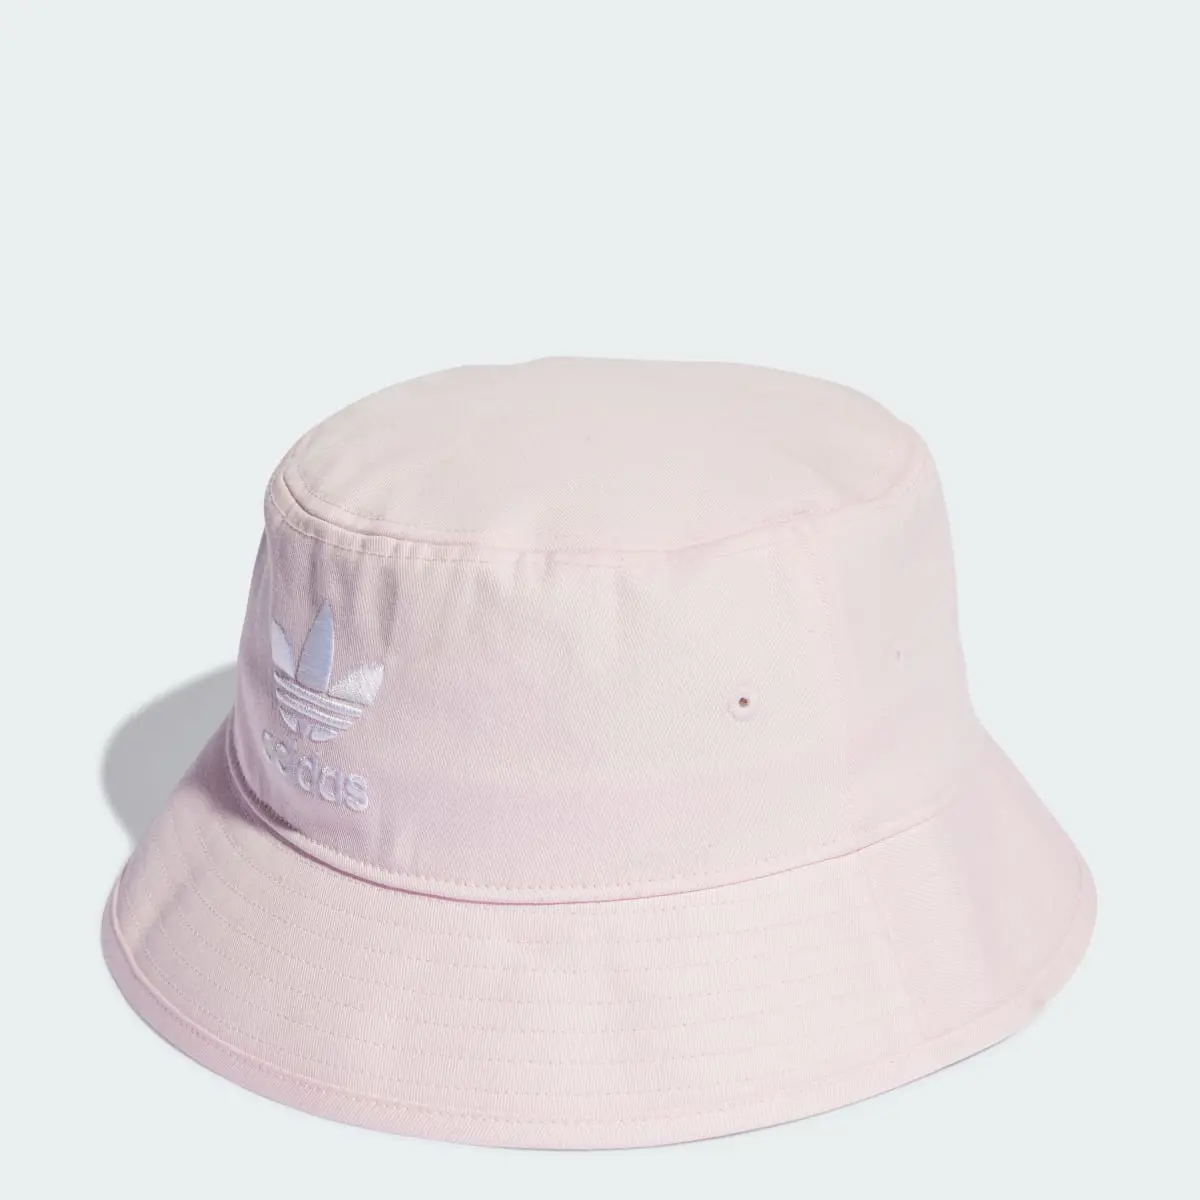 Adidas Trefoil Bucket Hat. 1